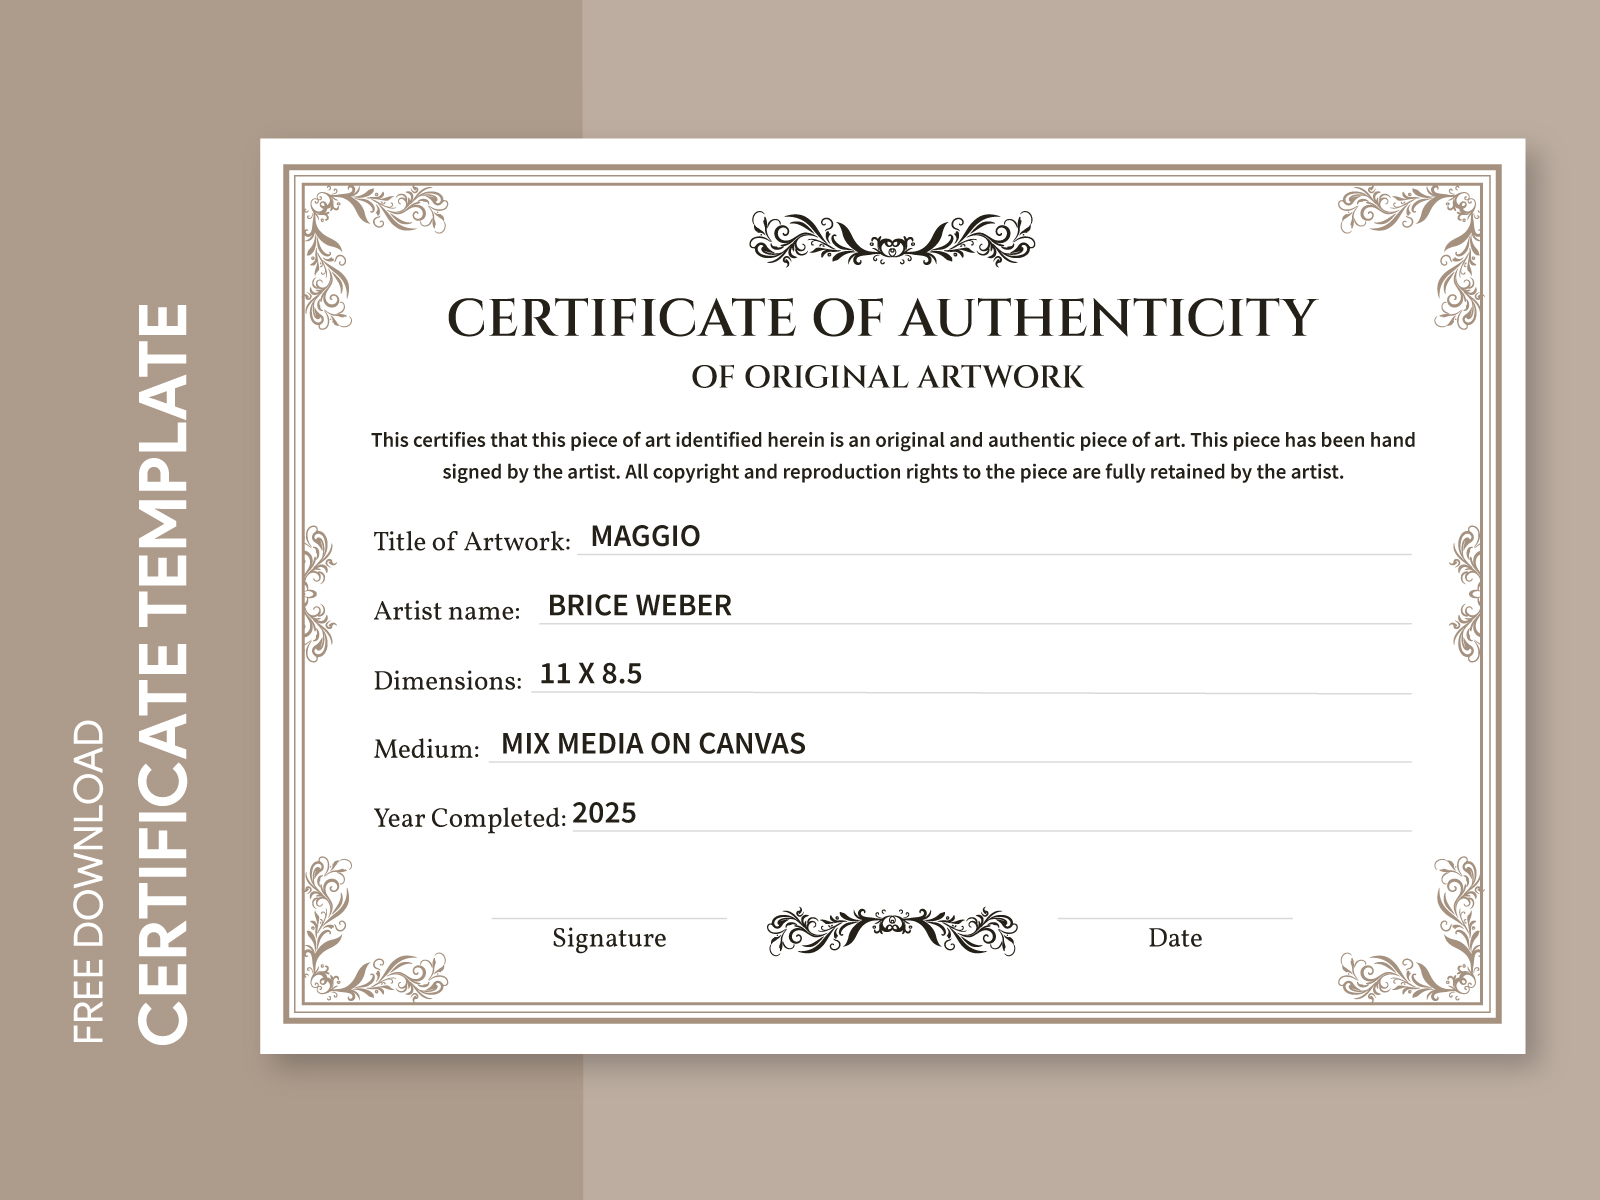 Certificate of Authenticity Free Google Docs Template gdoc.io